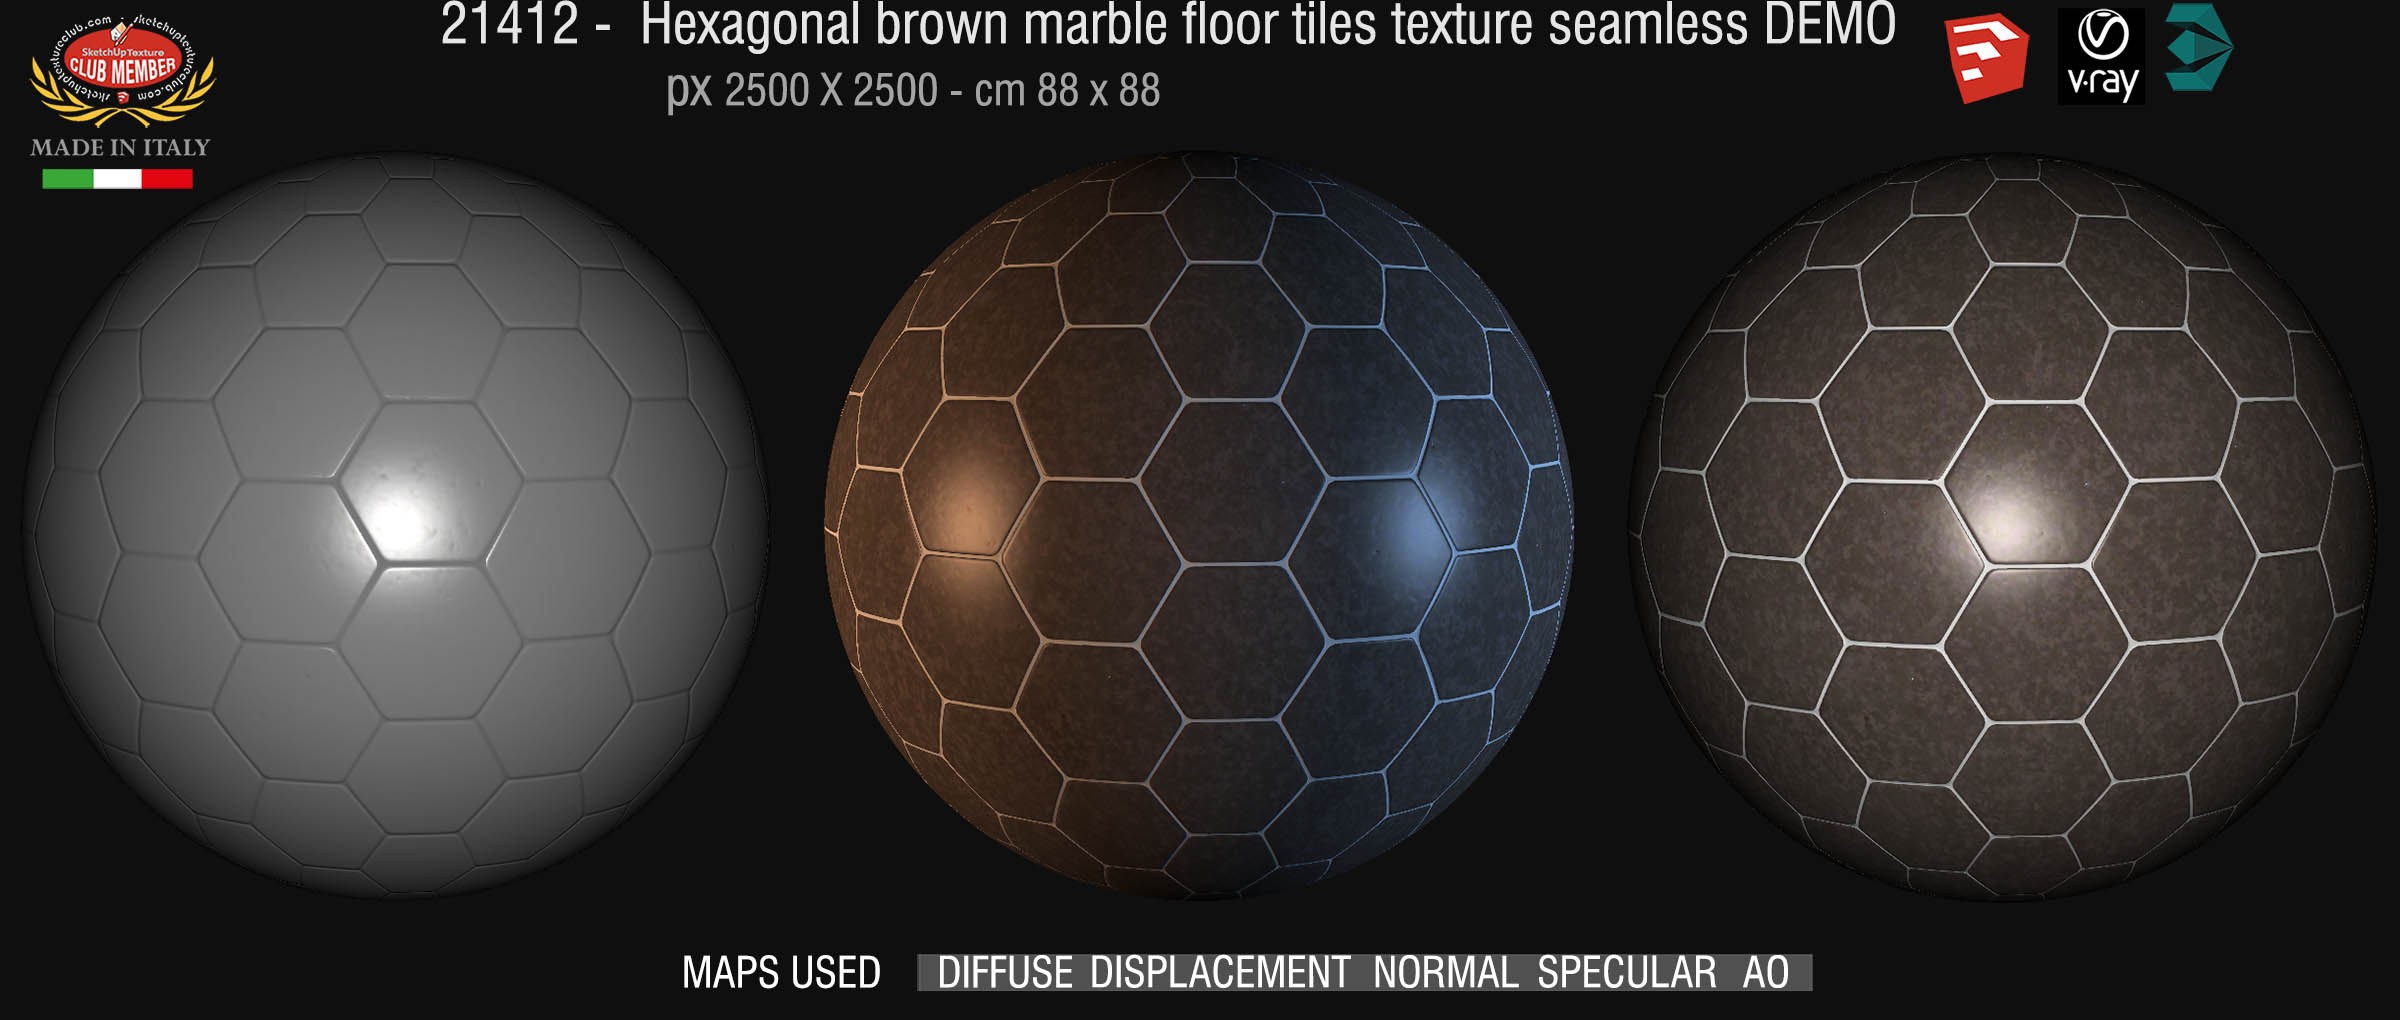 21412 hexagonal brown marble tile texture seamless + maps DEMO